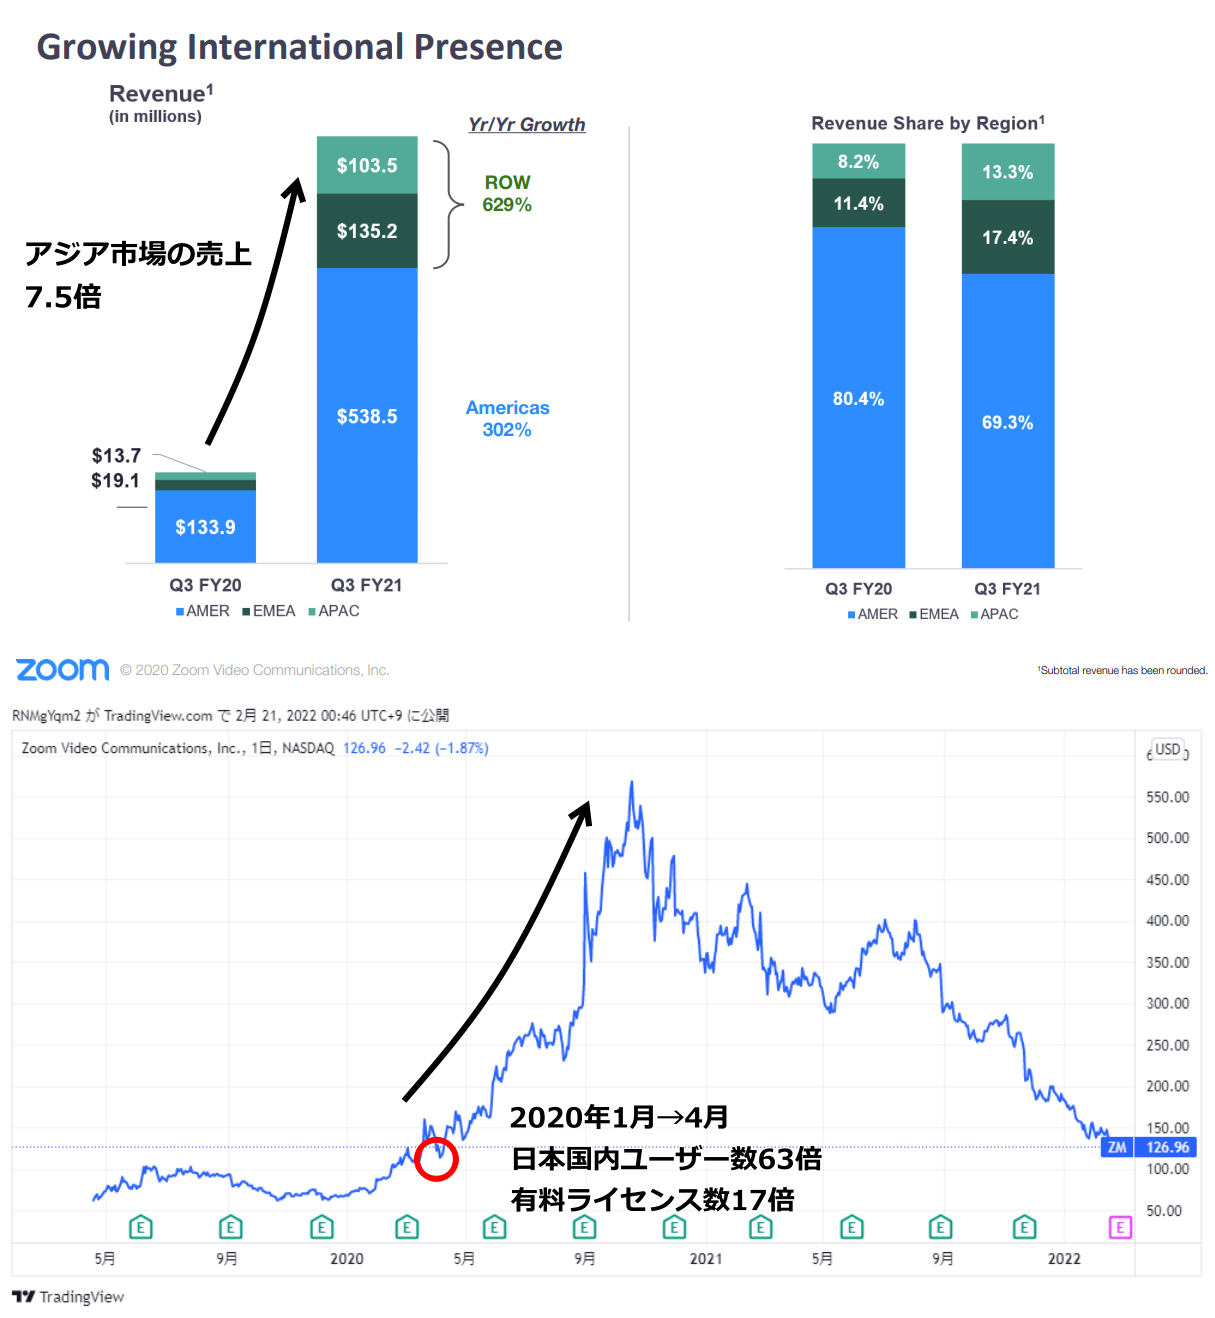 ZOOMの株価と日本市場の関係